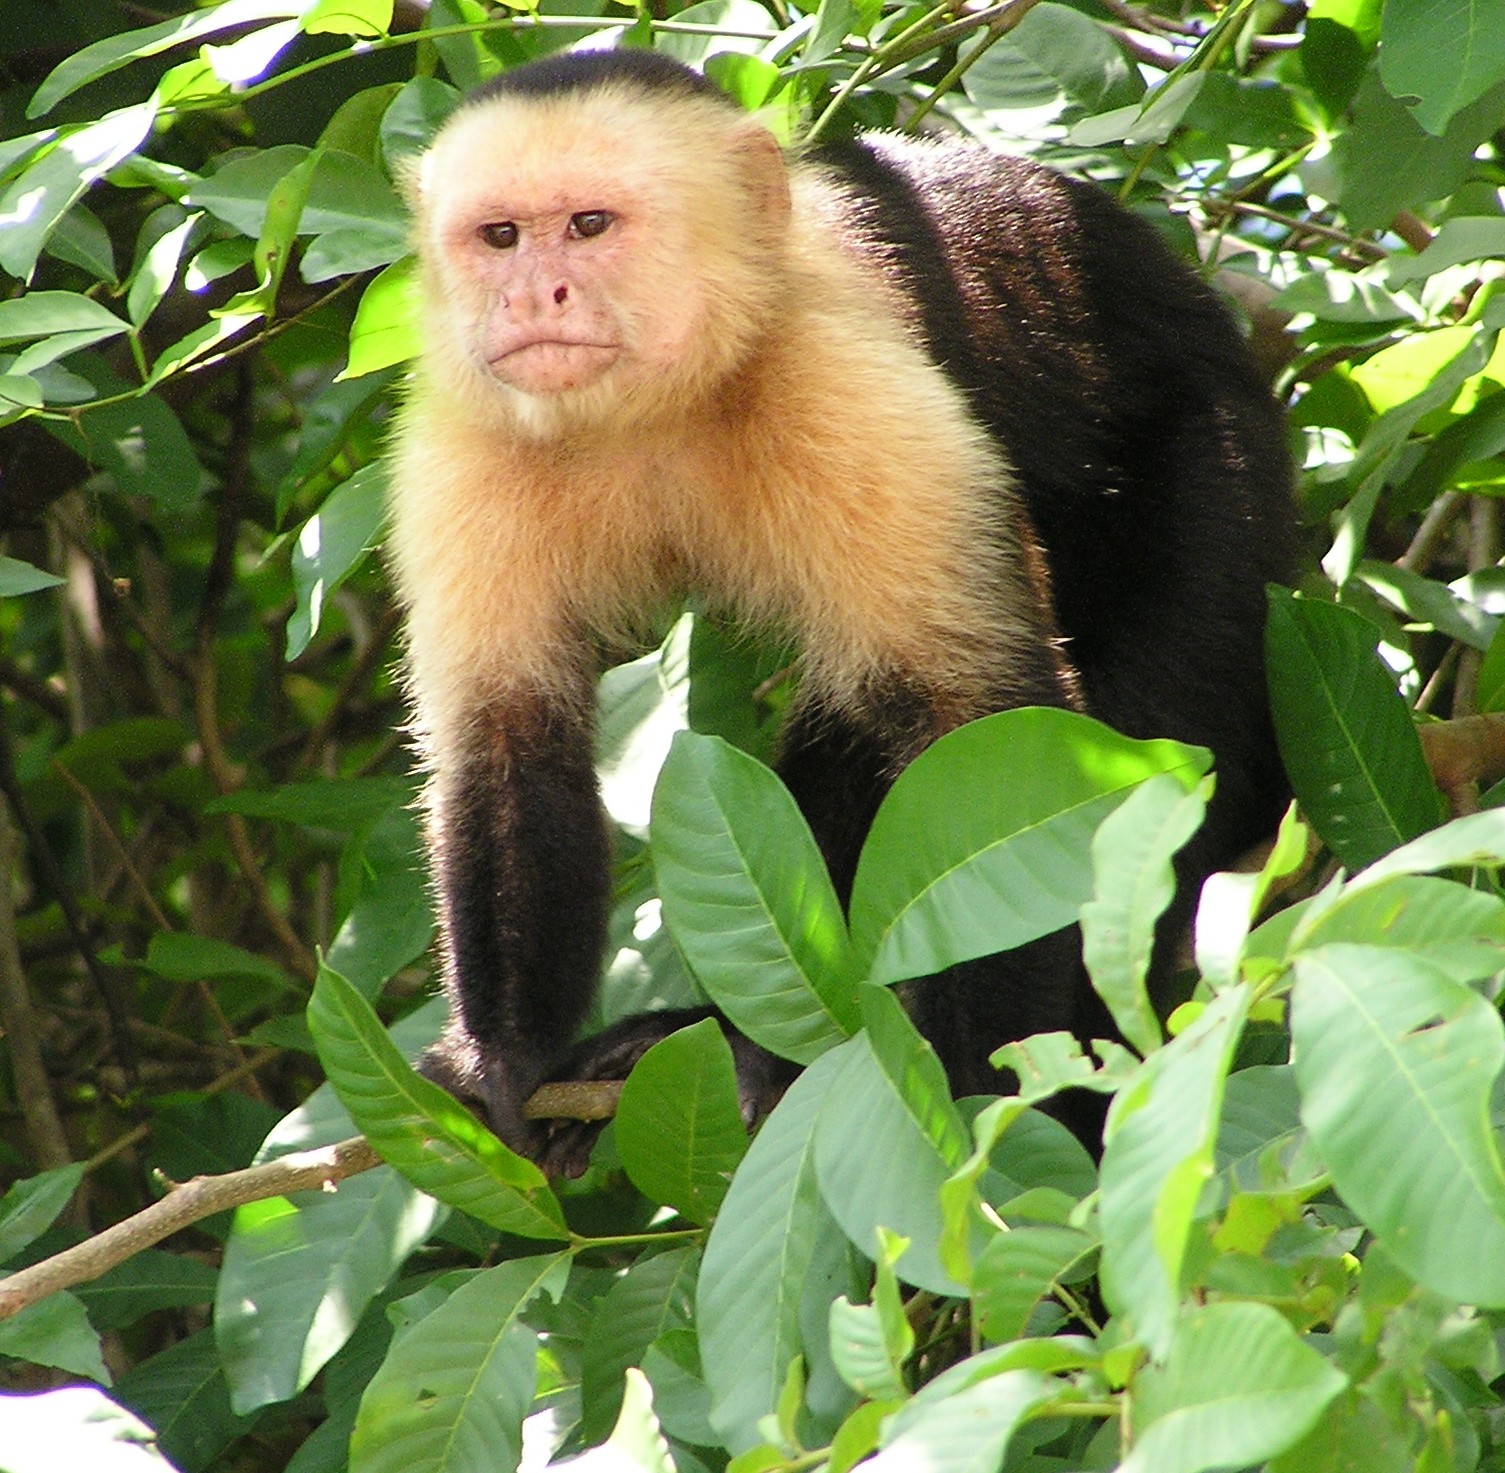 File:Capuchin Costa Rica.jpg - Wikimedia Commons